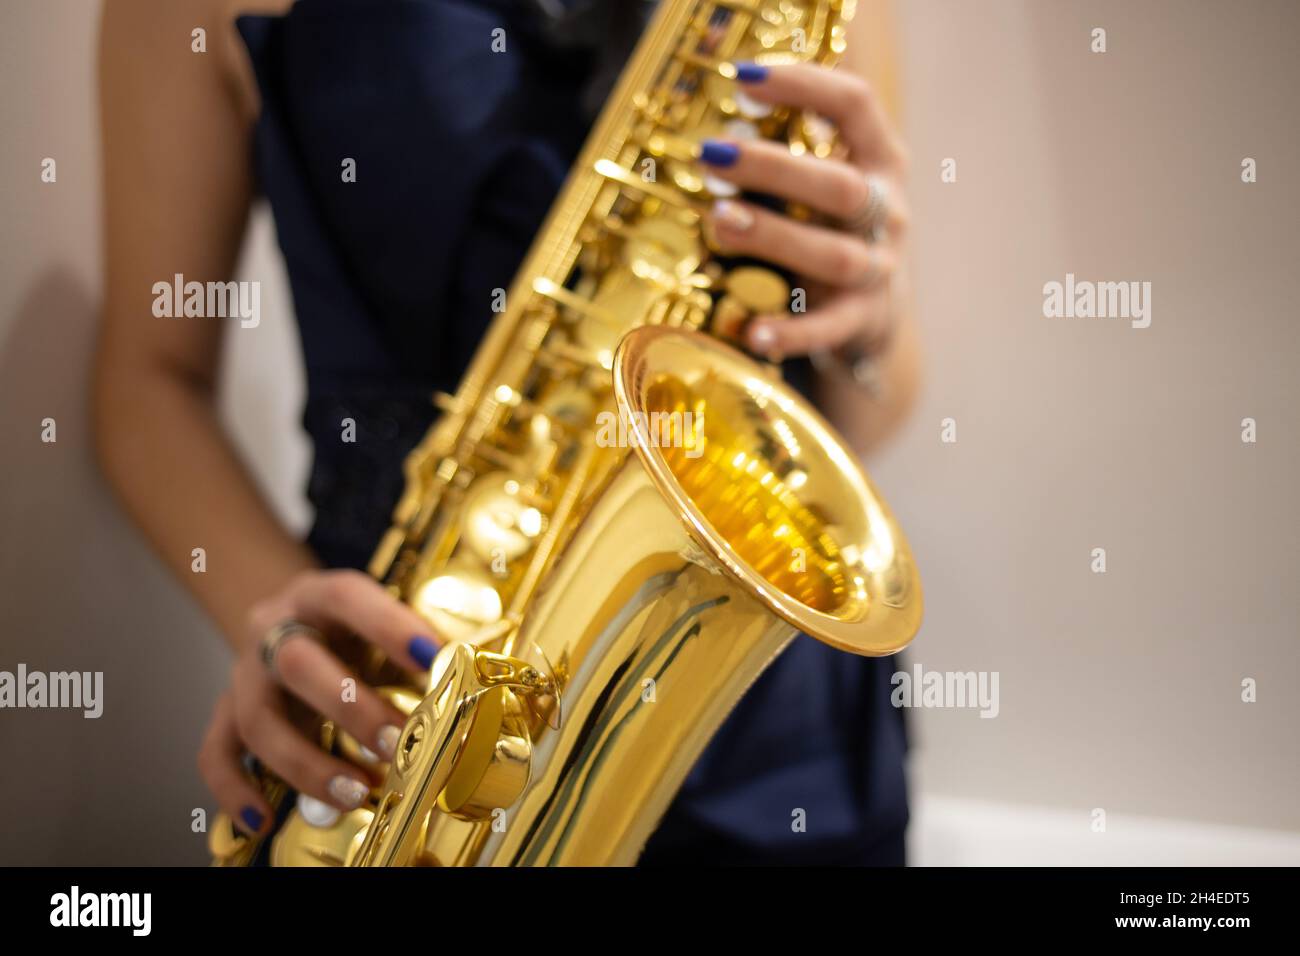 Young woman jazz musician playing the saxophone, closeup image Stock Photo